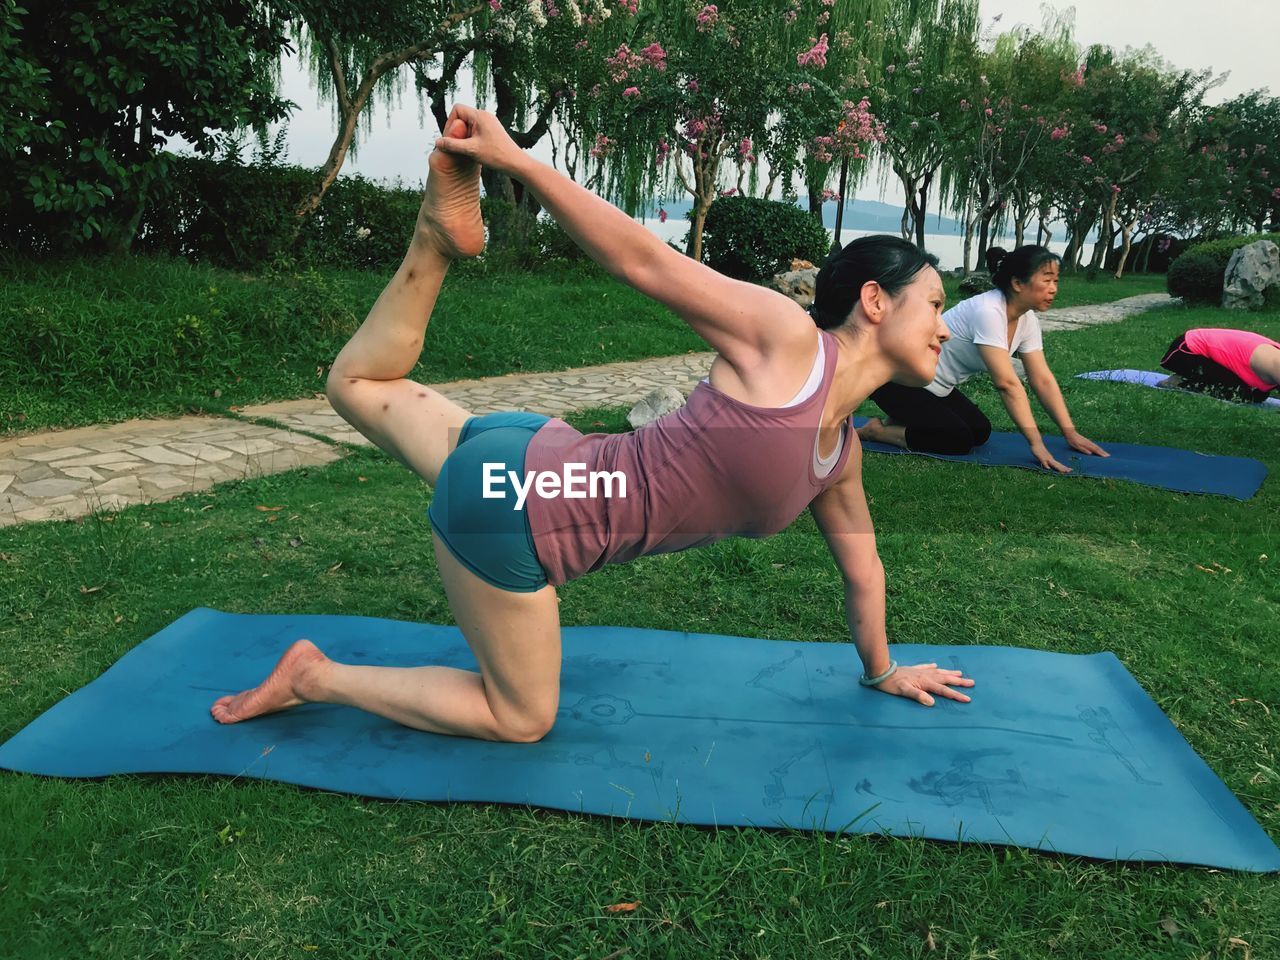 Women doing yoga on exercise mats at park